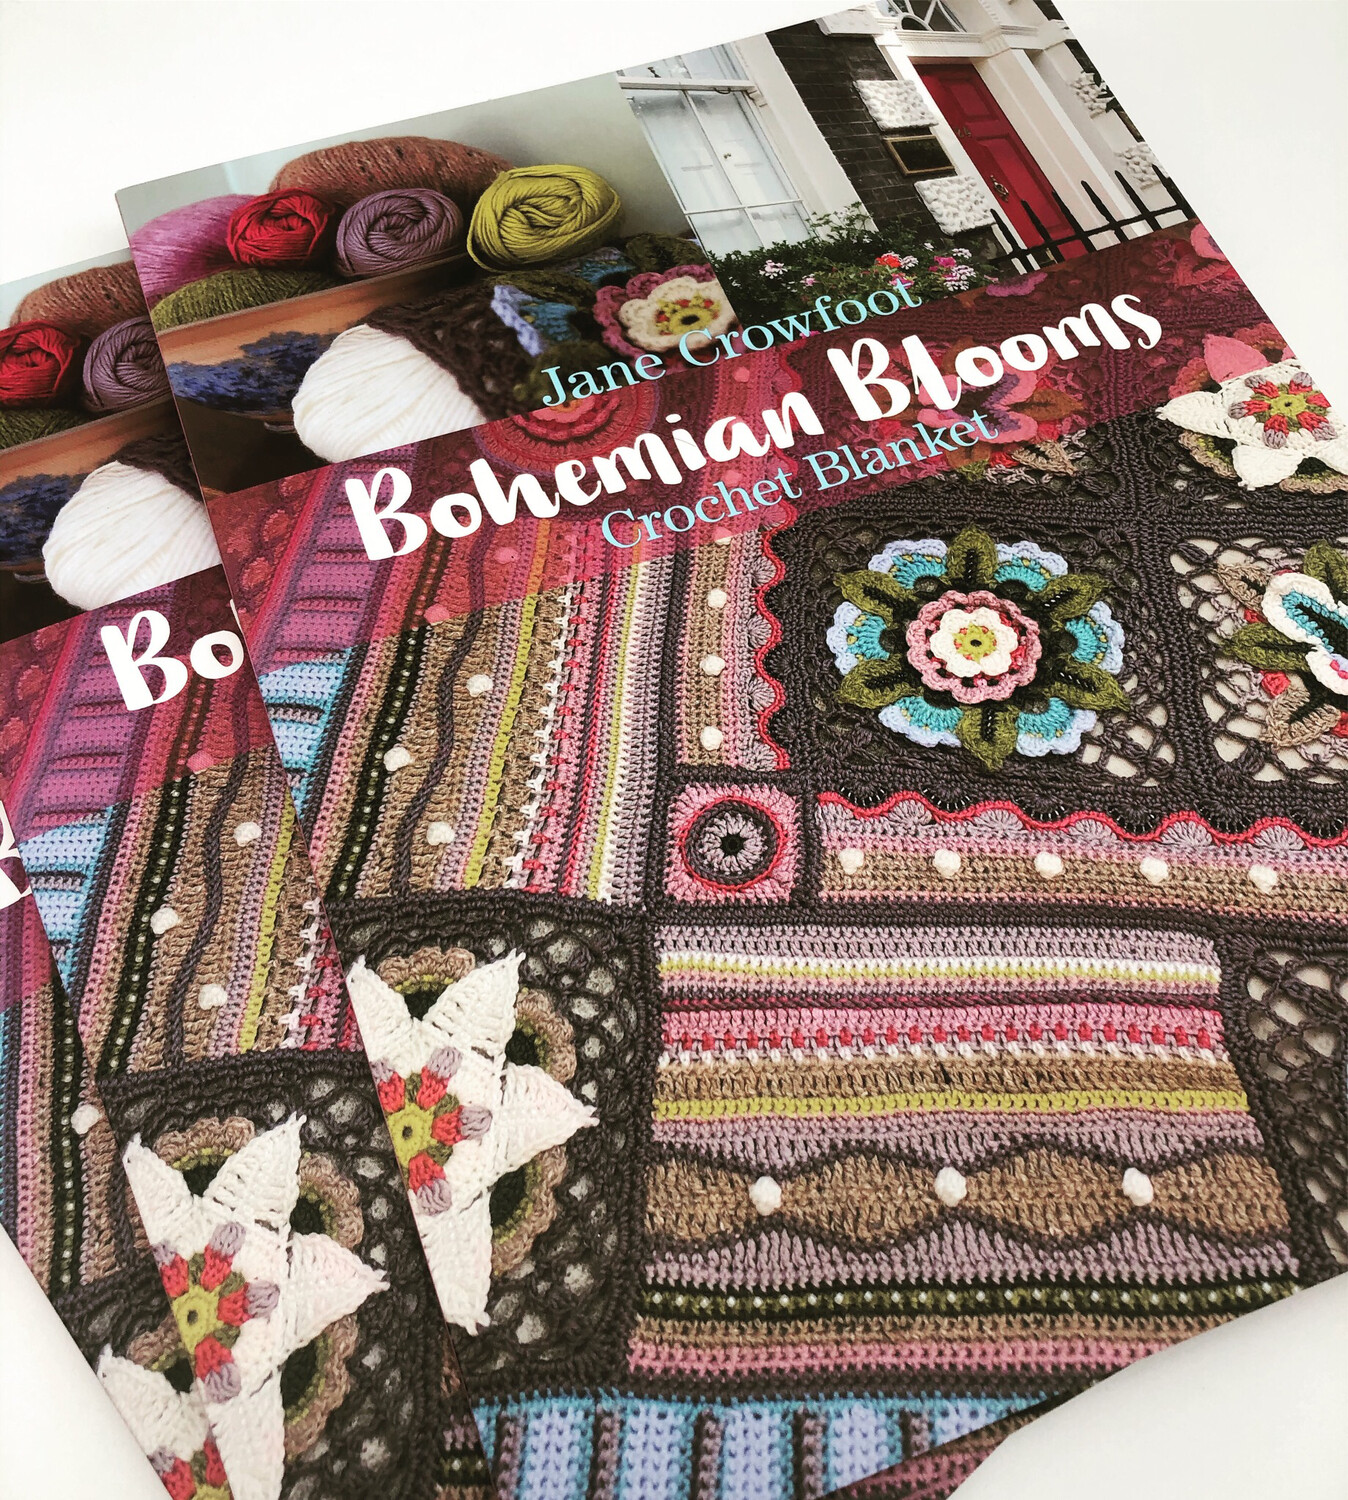 Jane Crowfoot Bohemian Blooms Blanket Crochet Book